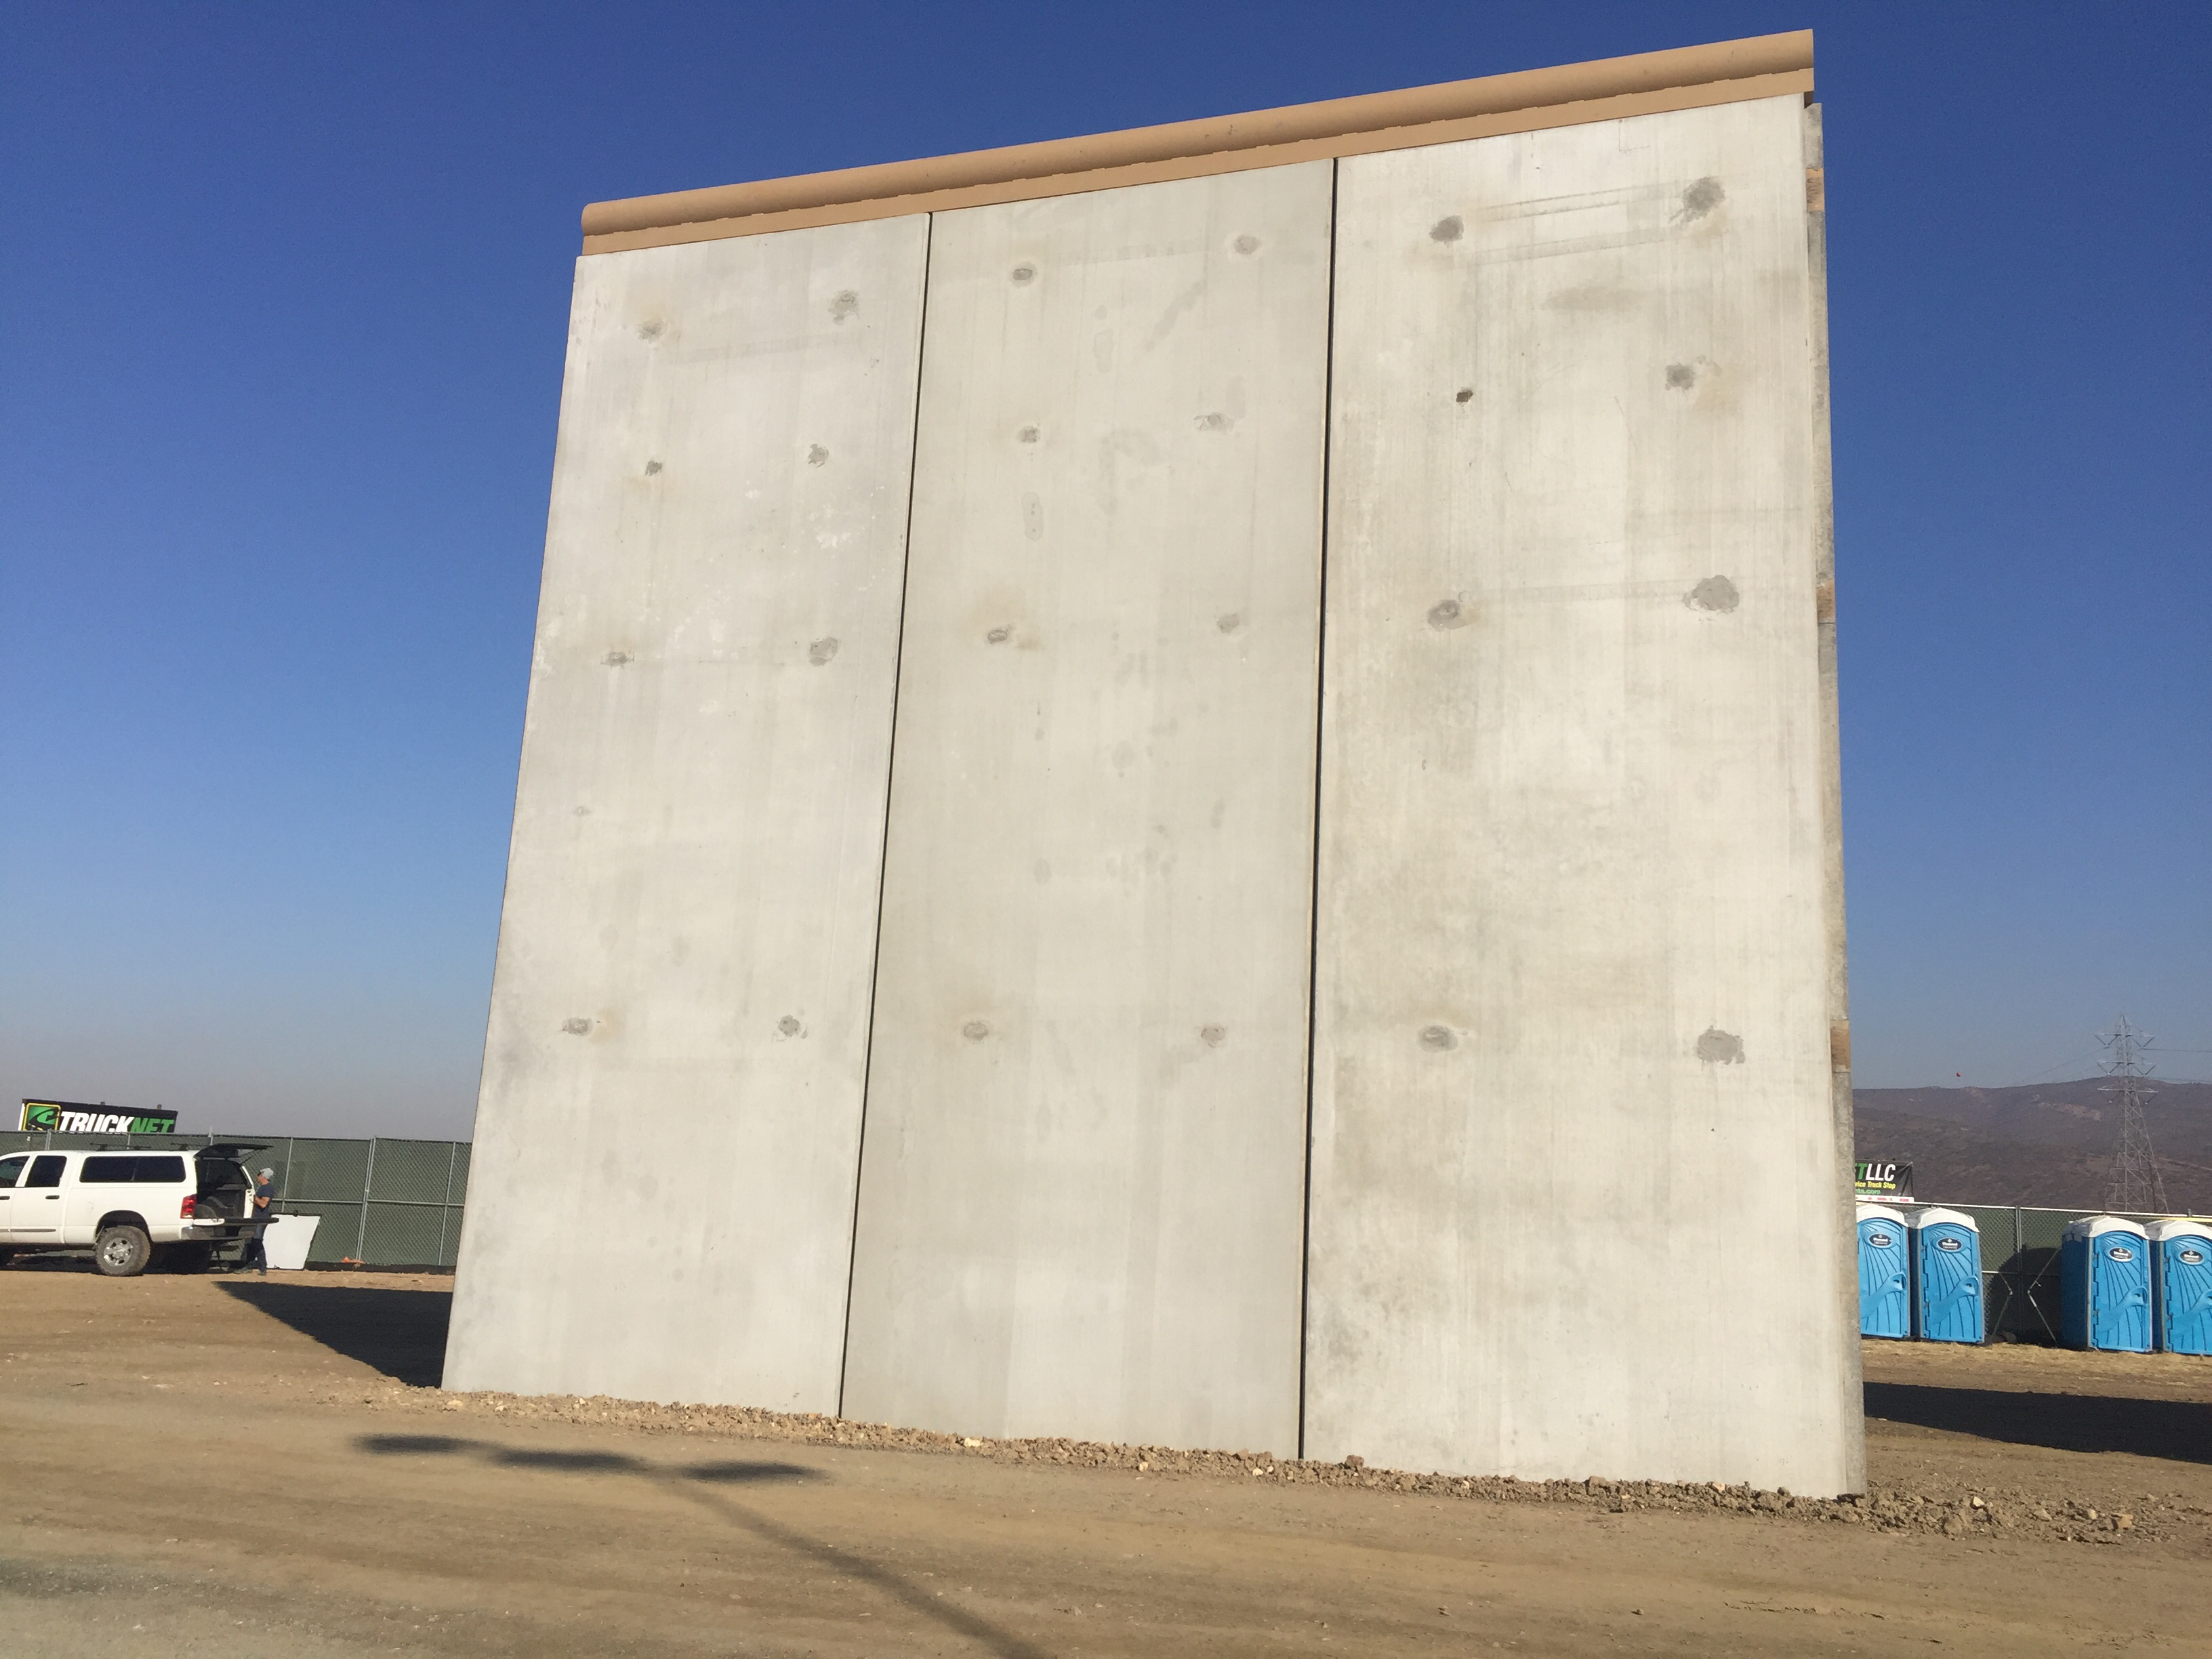 A border wall prototype stands by the U.S.-Mexico border, Oct. 26, 2017. <em>(Elma Gonzalez/KPBS)</em>